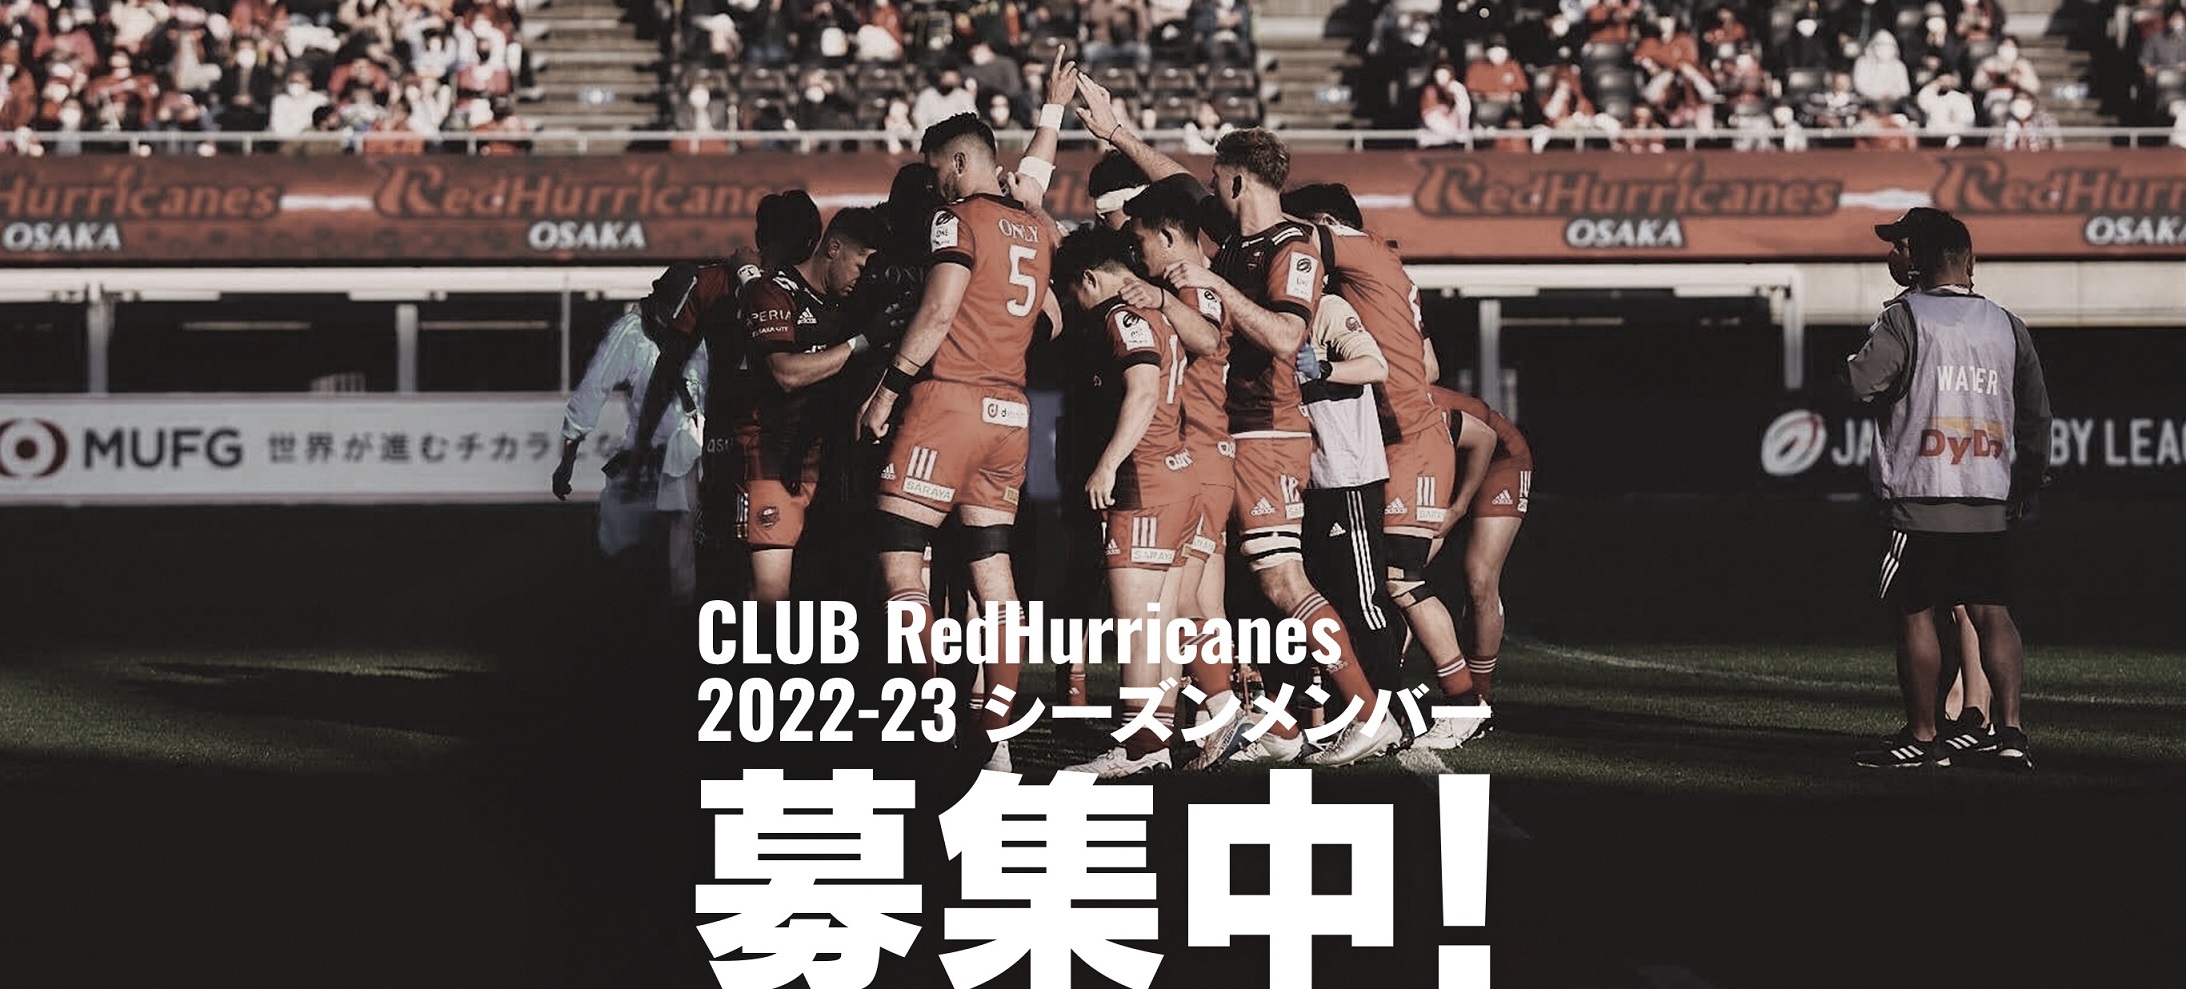 CLUB RedHurricanes 2022-23 シーズンメンバー募集開始